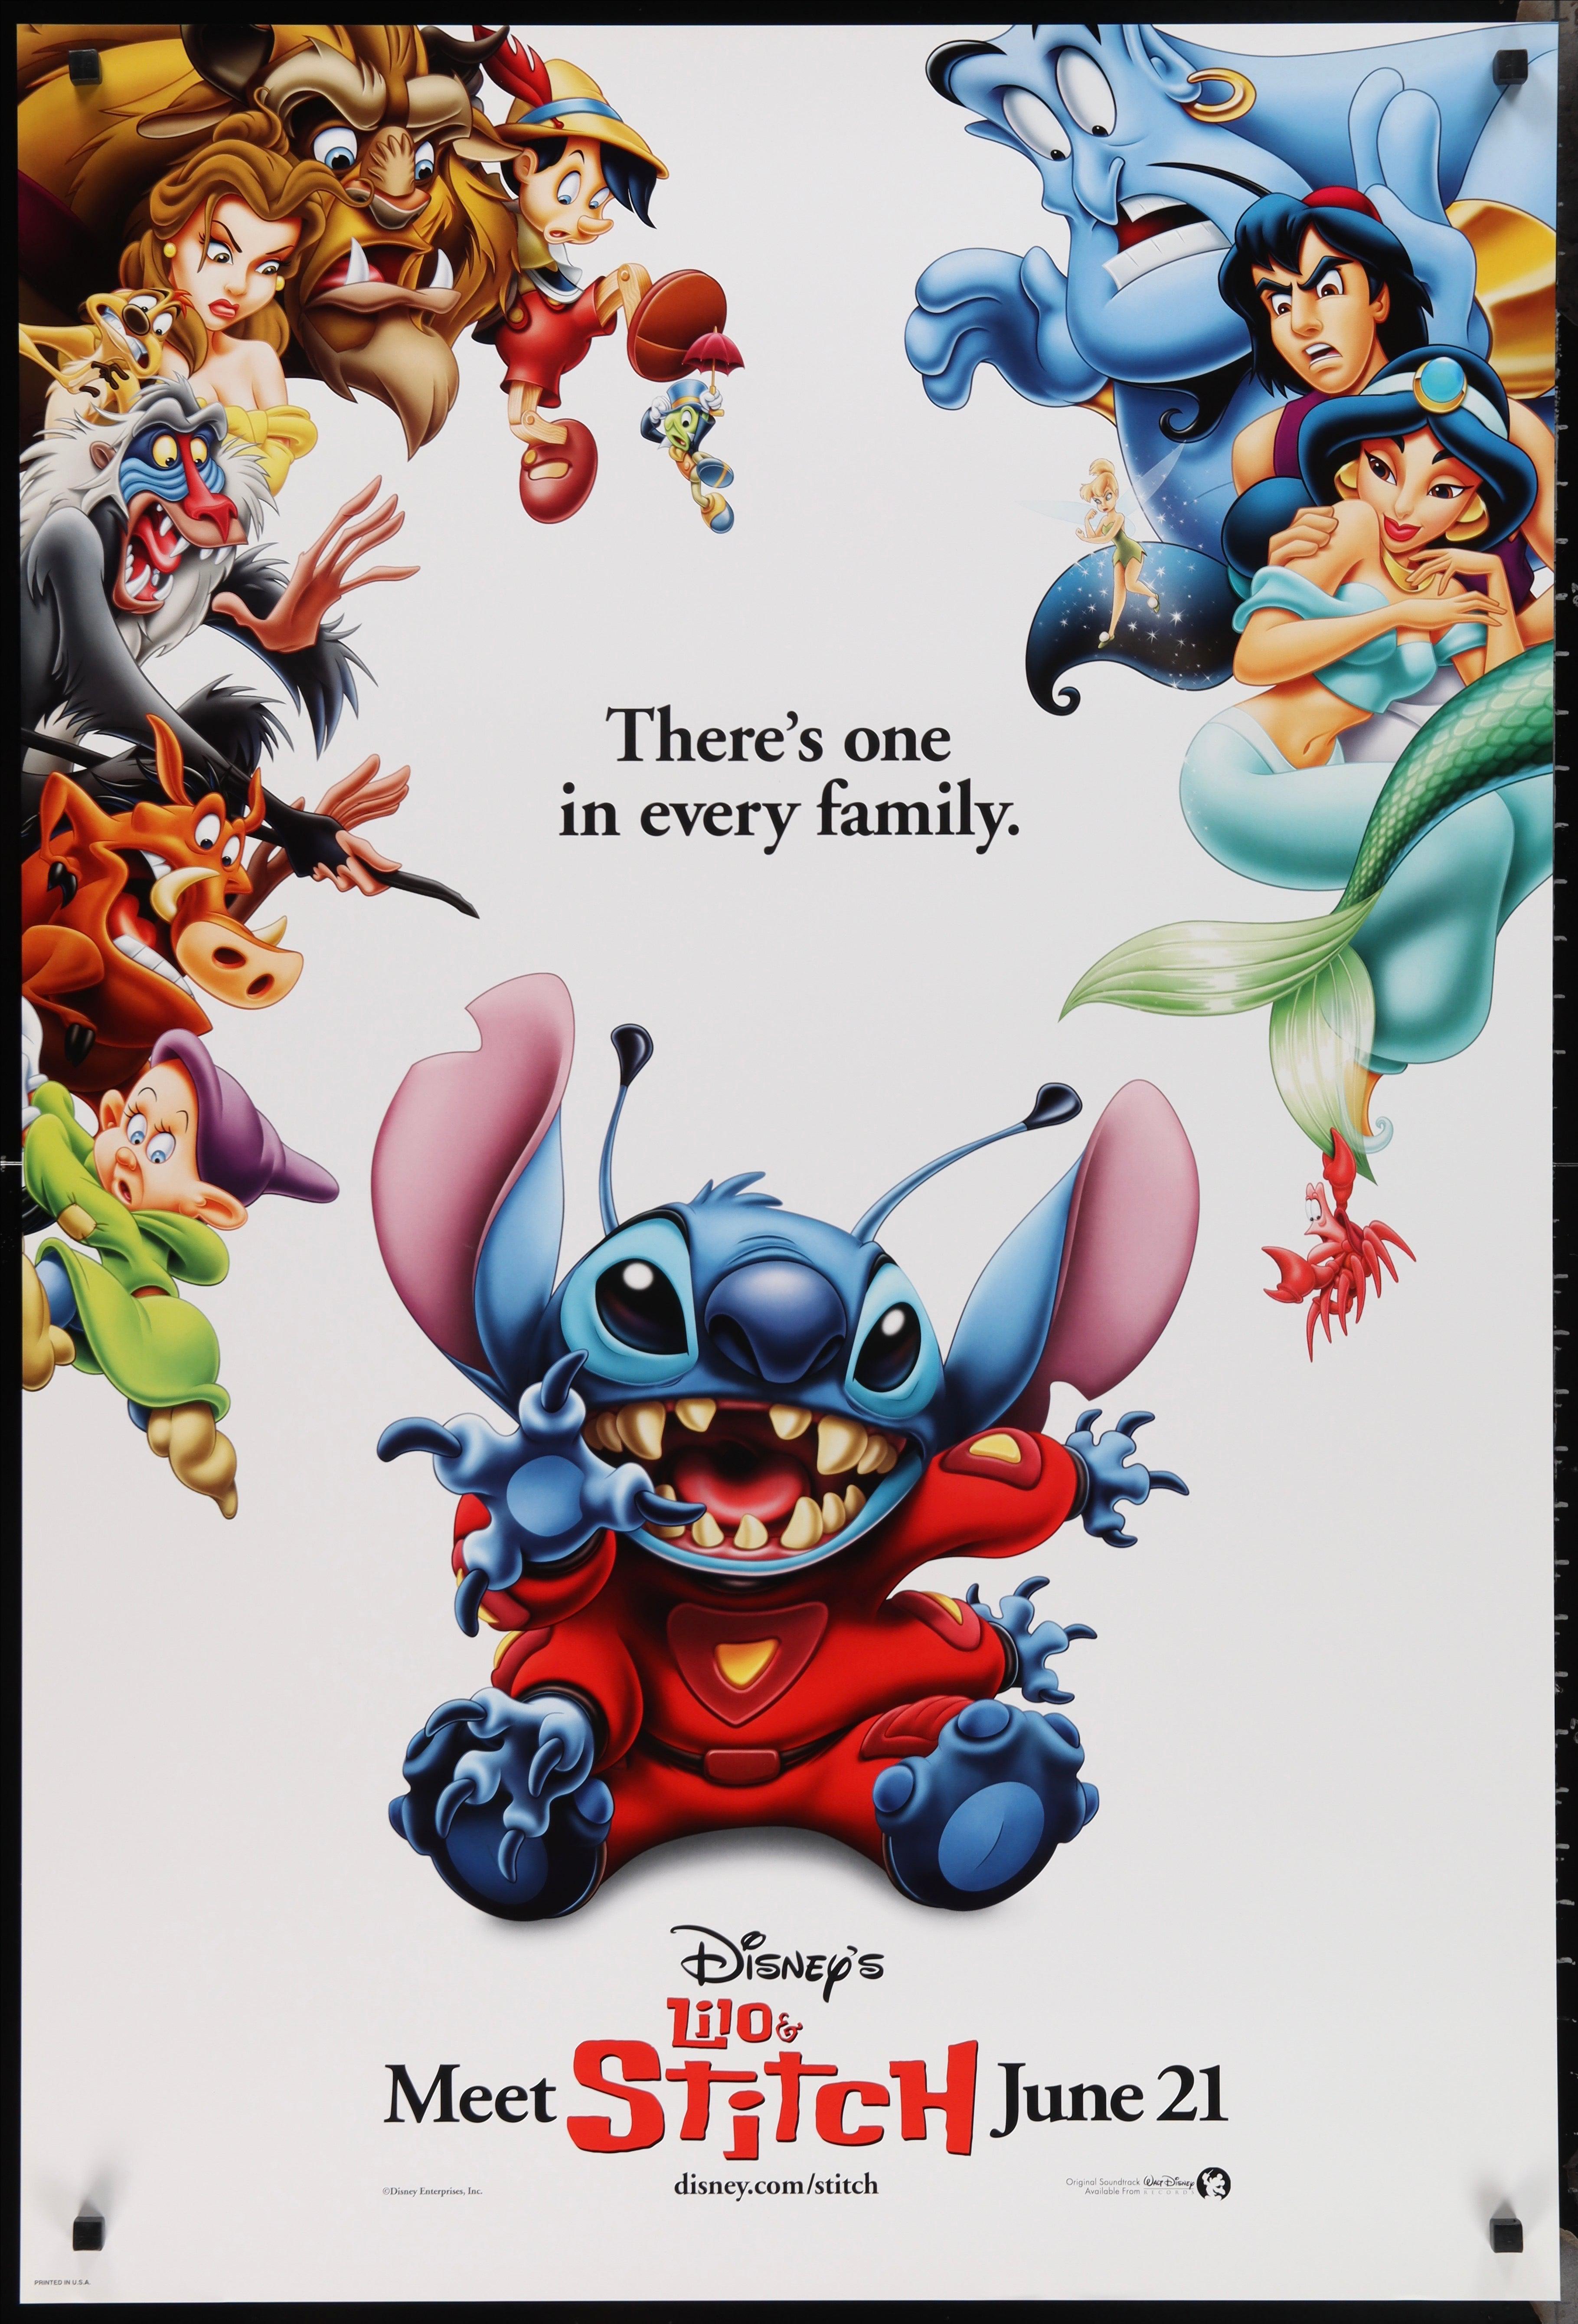 Lilo and Stitch Movie Poster 2002 1 Sheet (27x41)